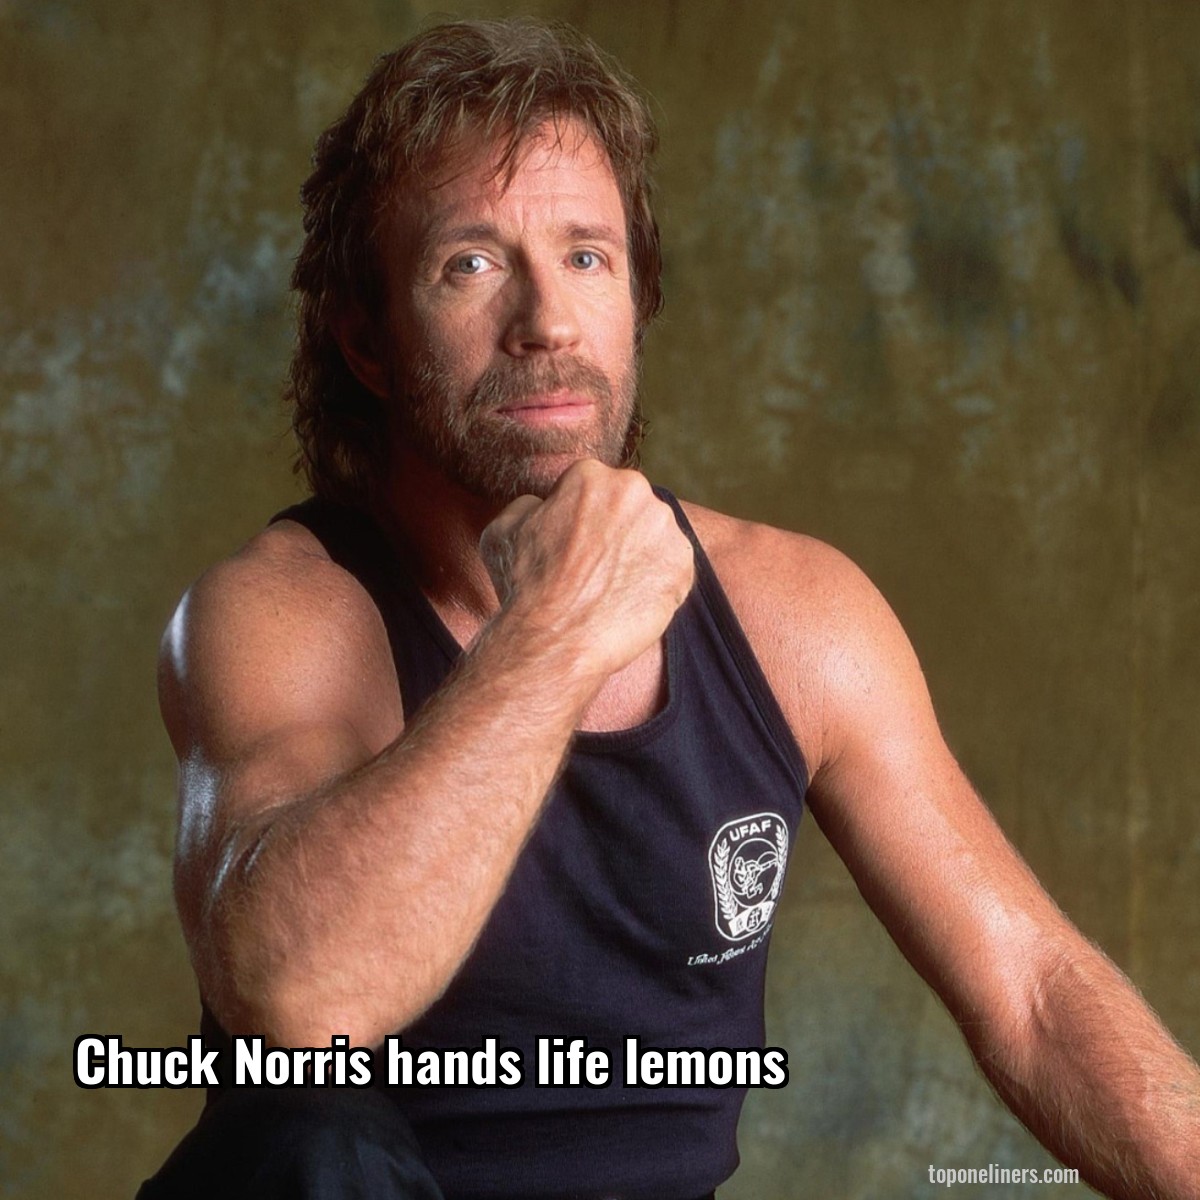 Chuck Norris hands life lemons